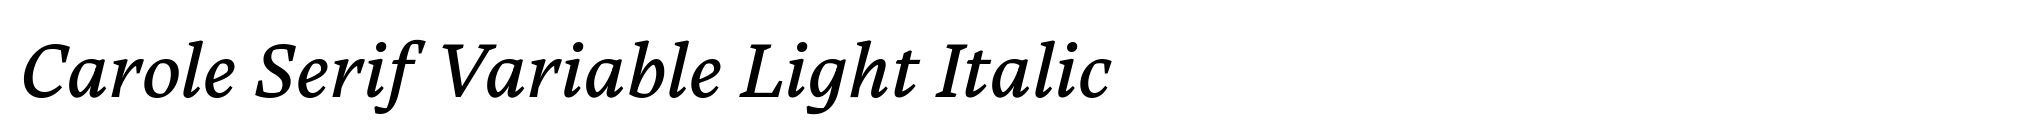 Carole Serif Variable Light Italic image